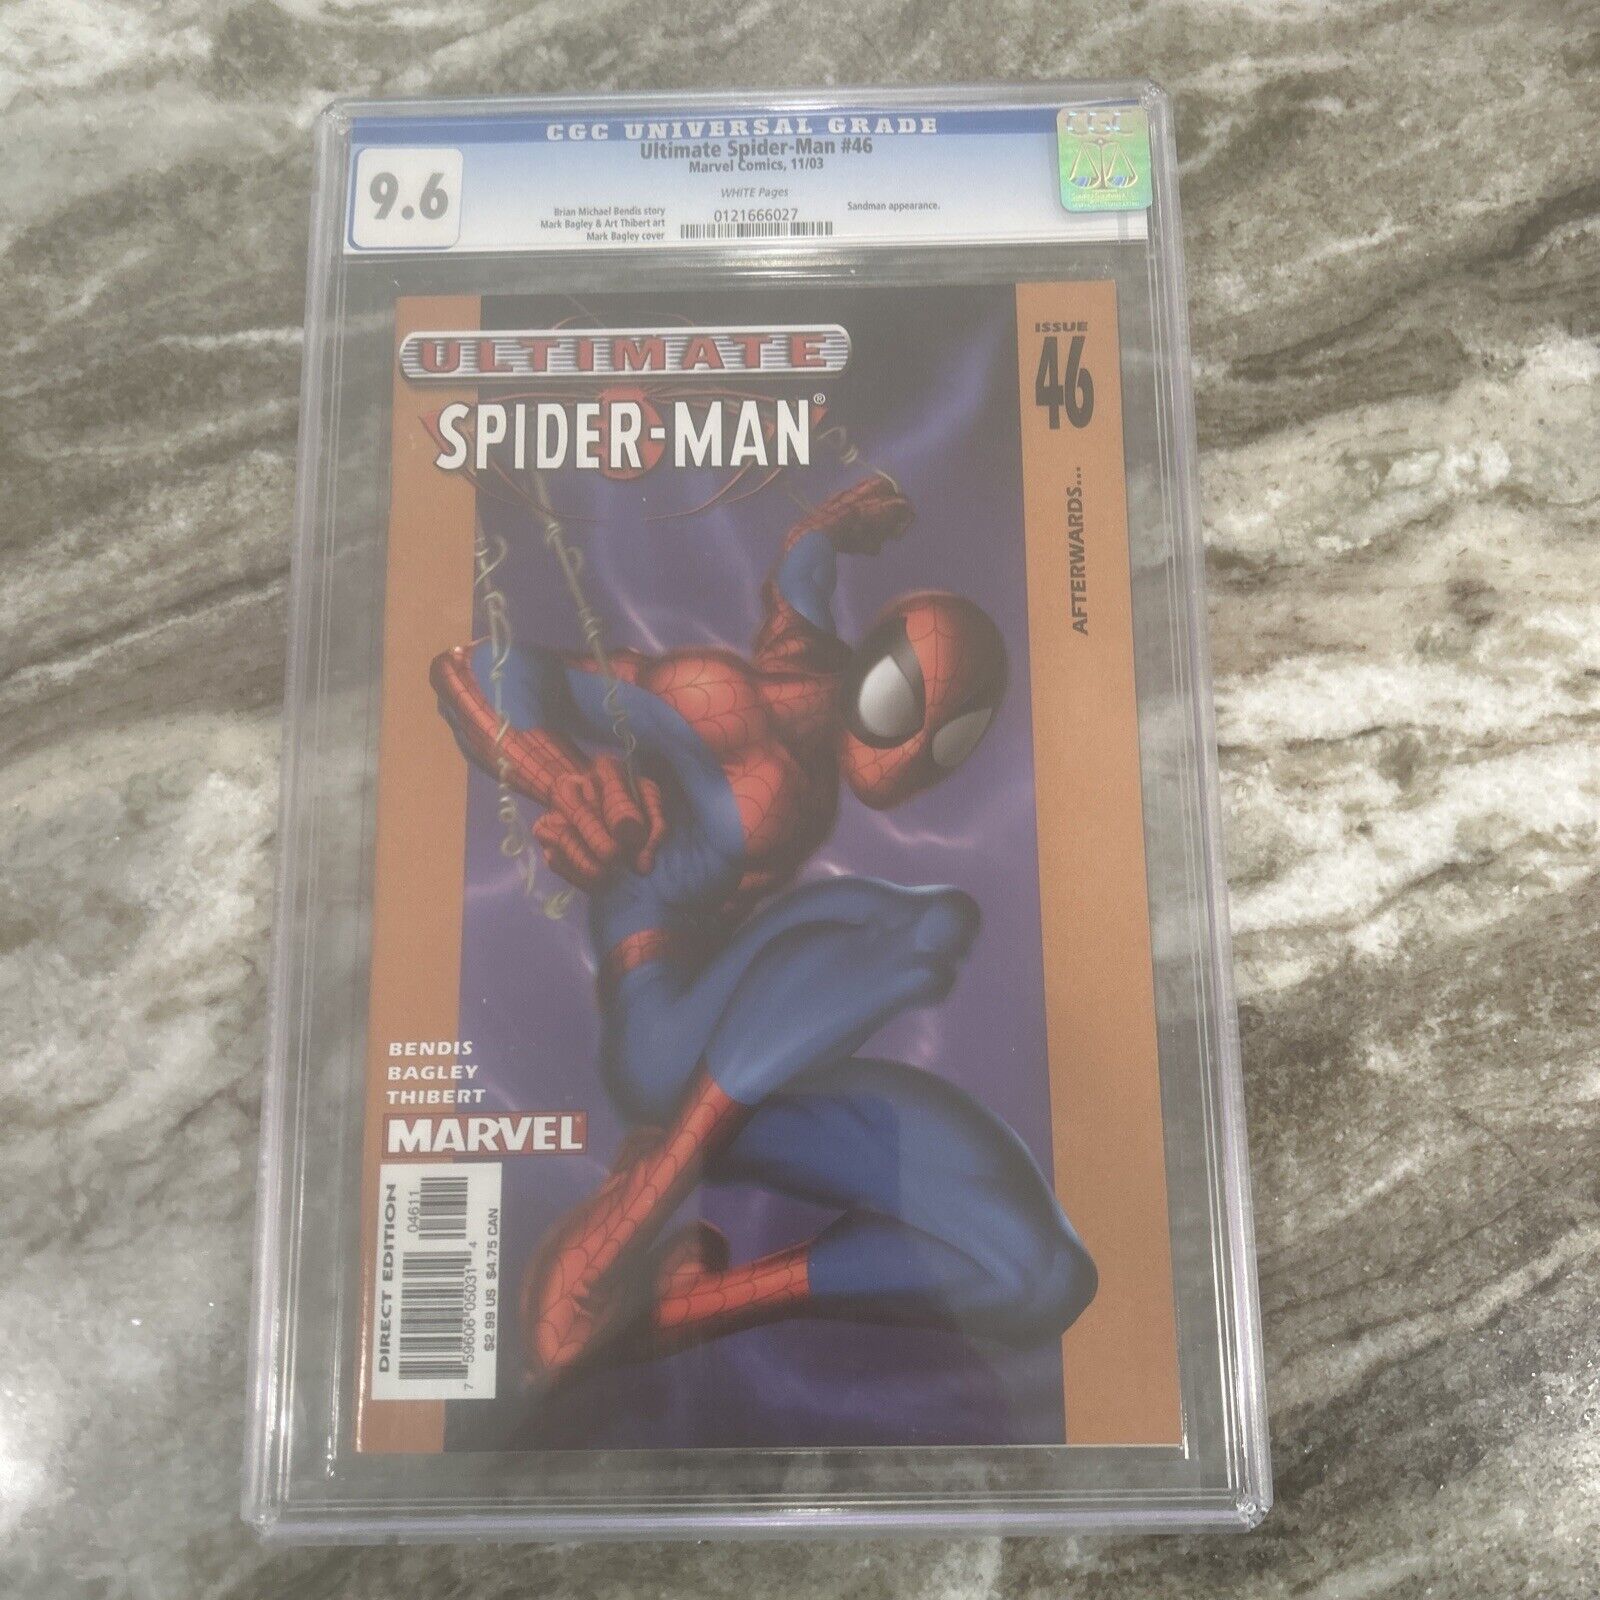 ULTIMATE SPIDER-MAN #46 - CGC 9.6 - SANDMAN - MARK BAGLEY COVER